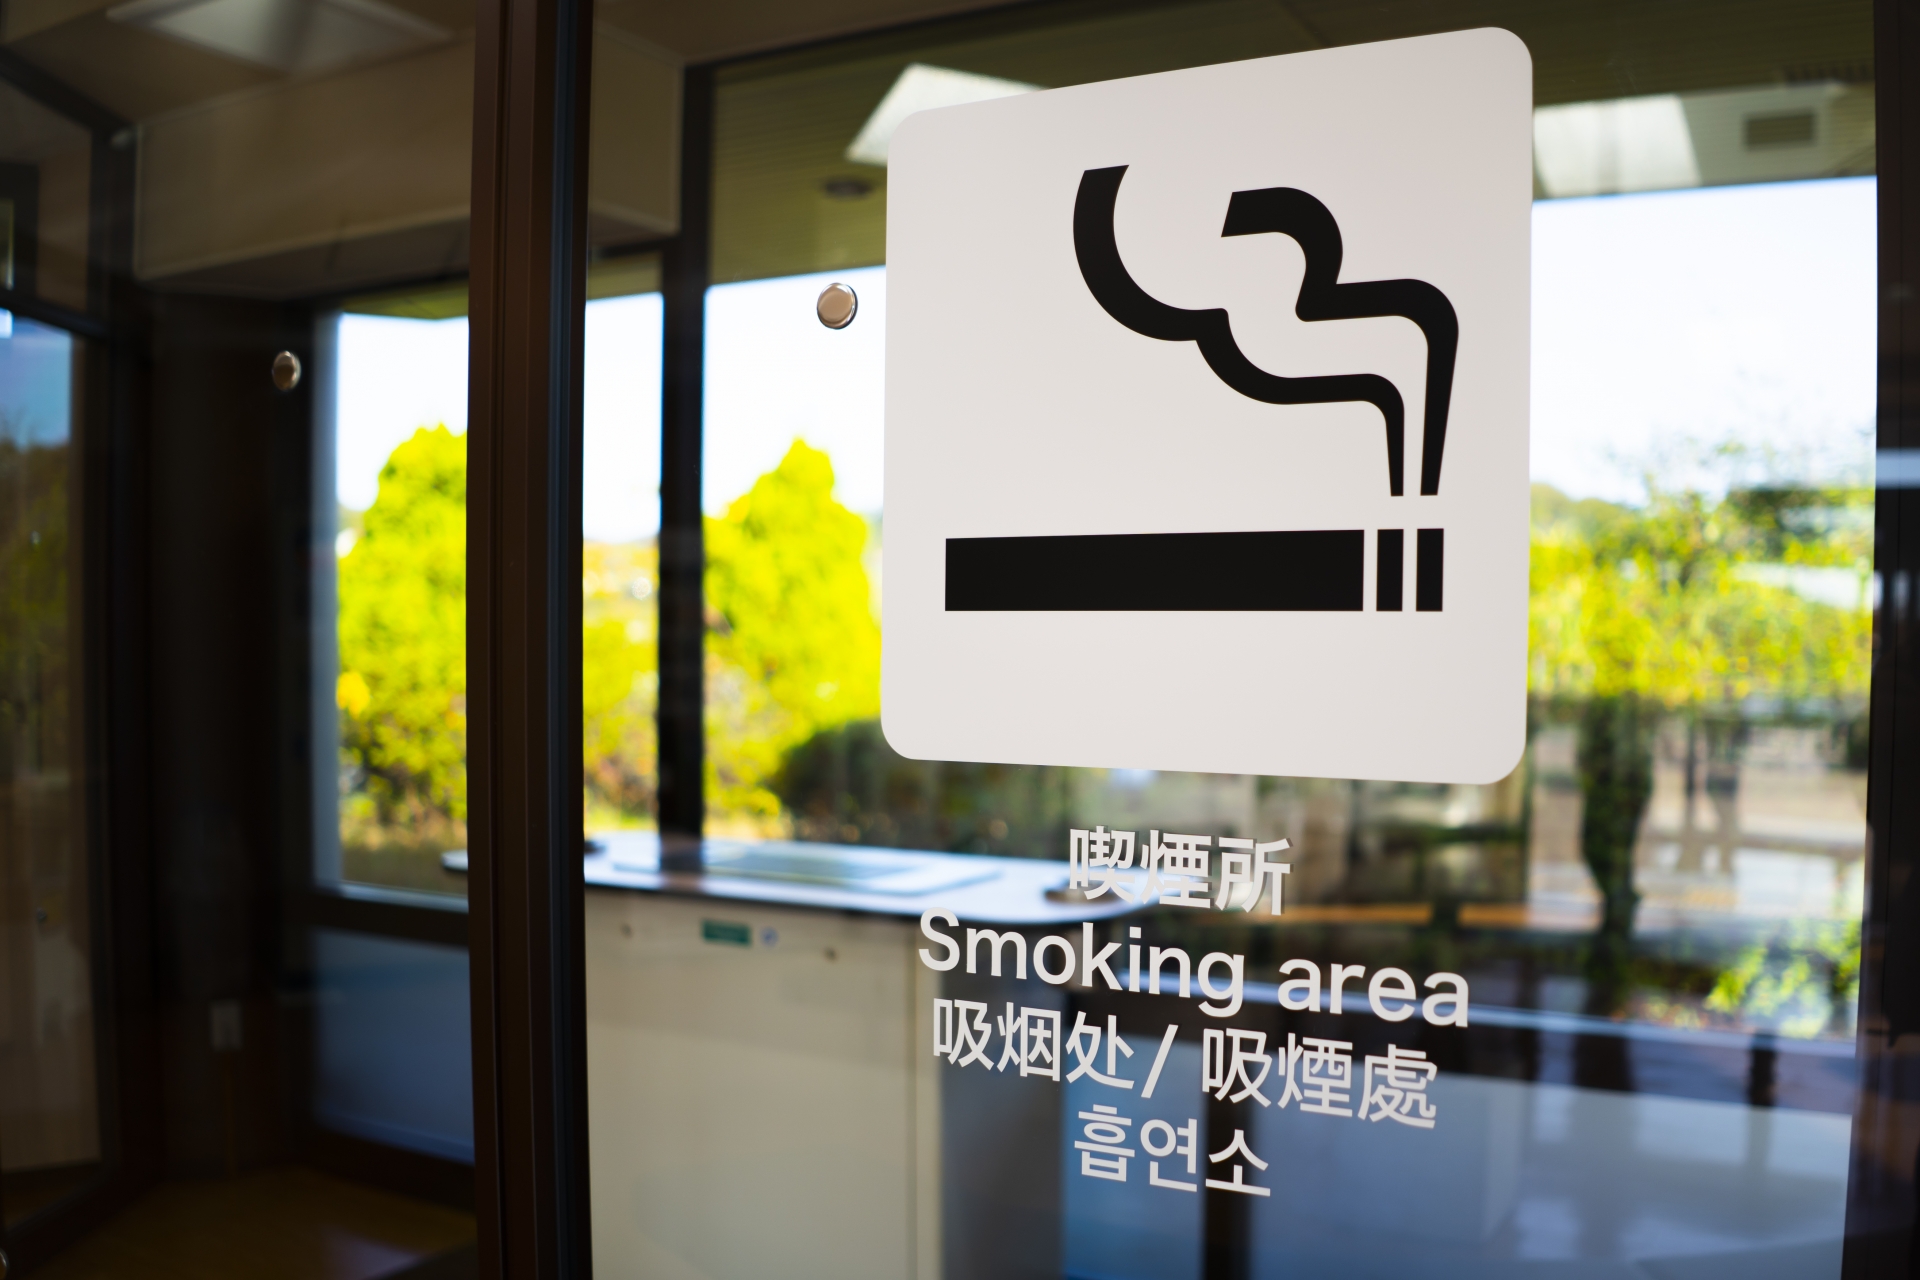 2961806 m - 受動喫煙防止対策支援に役立つ「生衛業受動喫煙防止対策助成金」